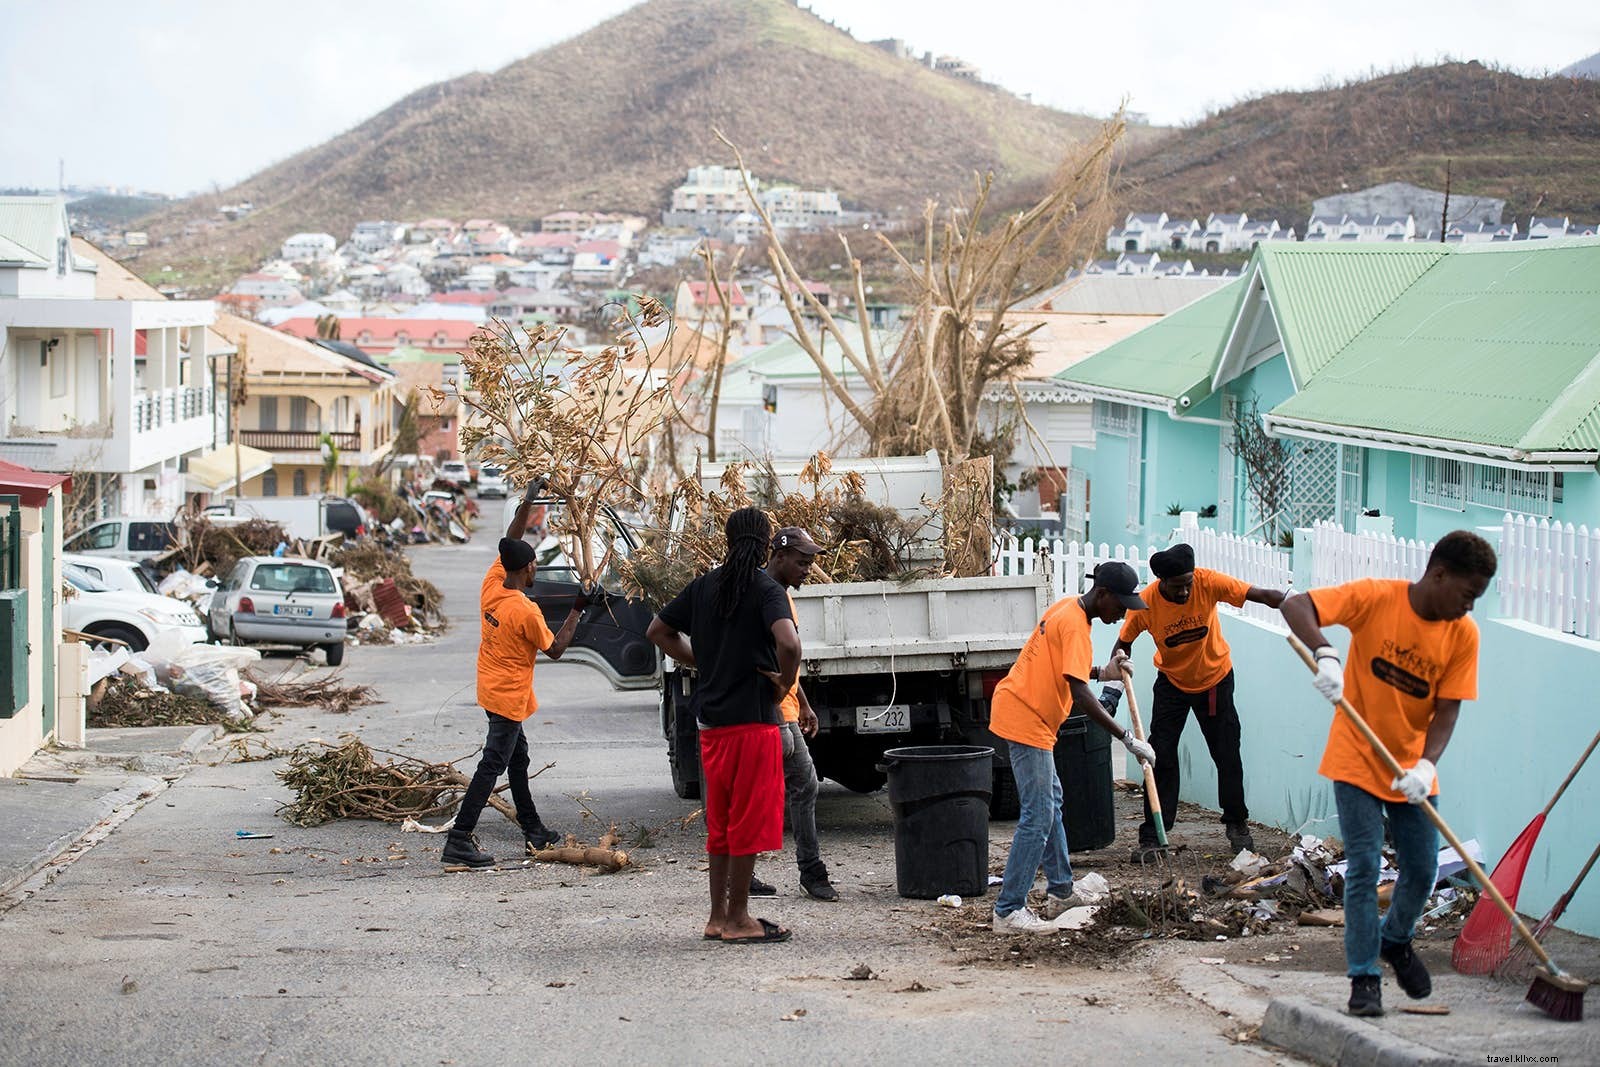 Soccorso uragano ai Caraibi dopo Irma e Maria:come aiutare 